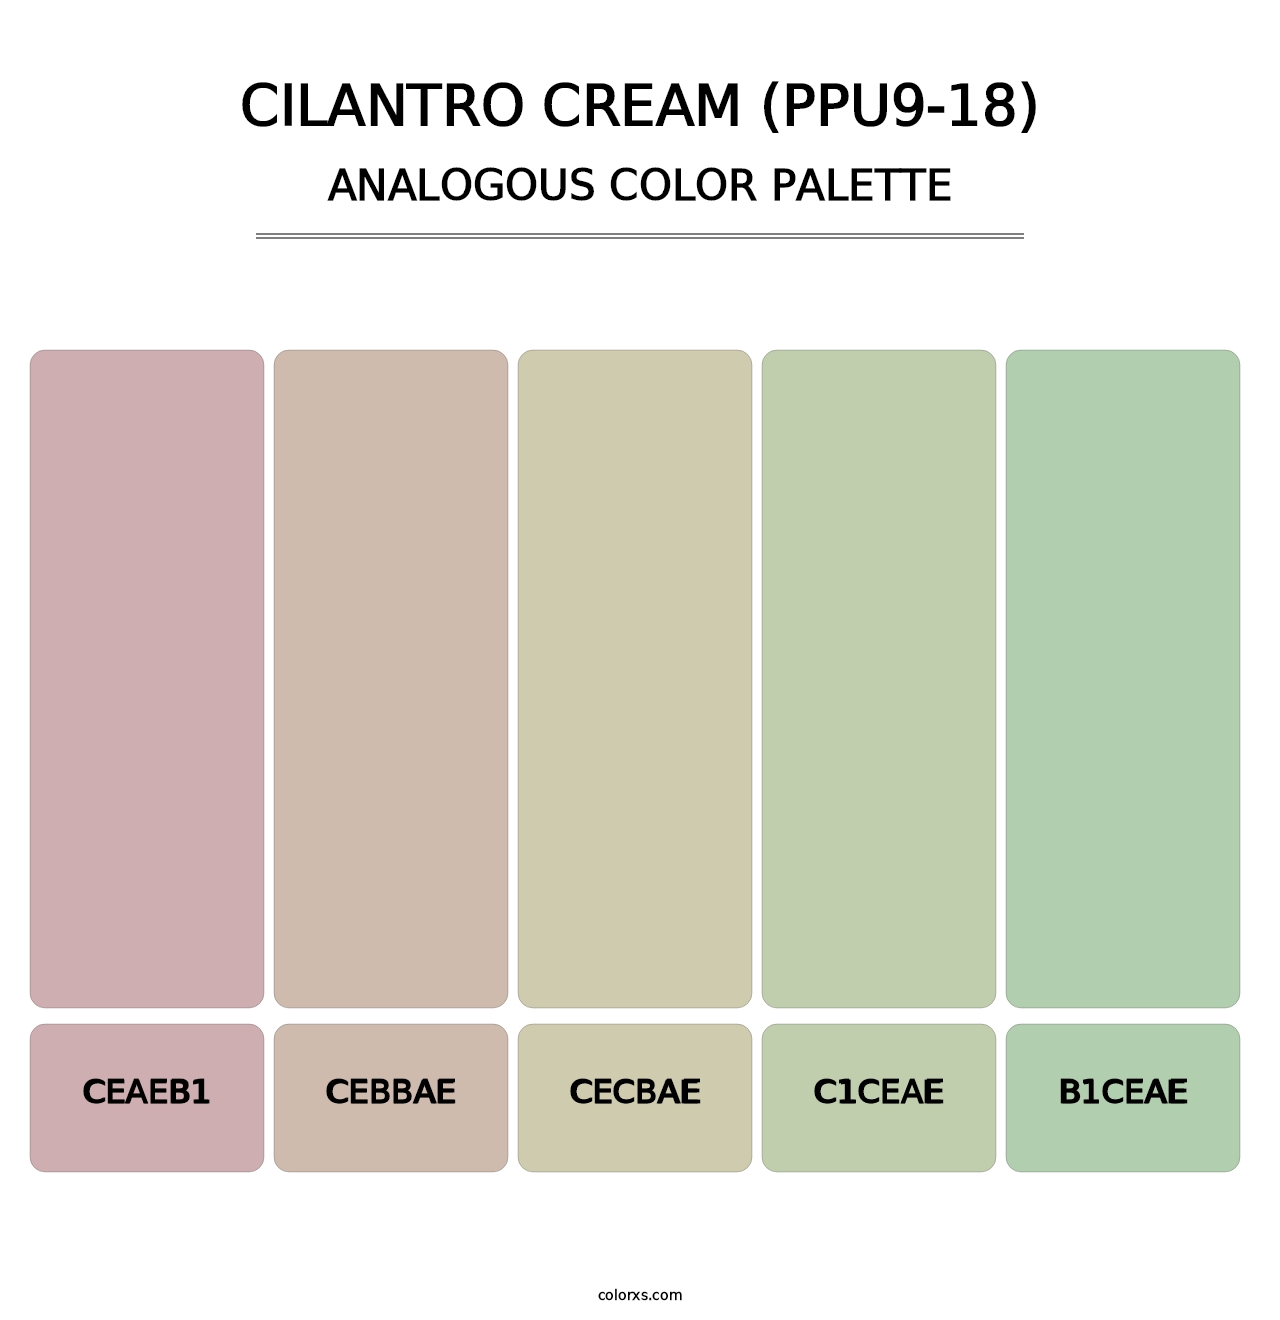 Cilantro Cream (PPU9-18) - Analogous Color Palette